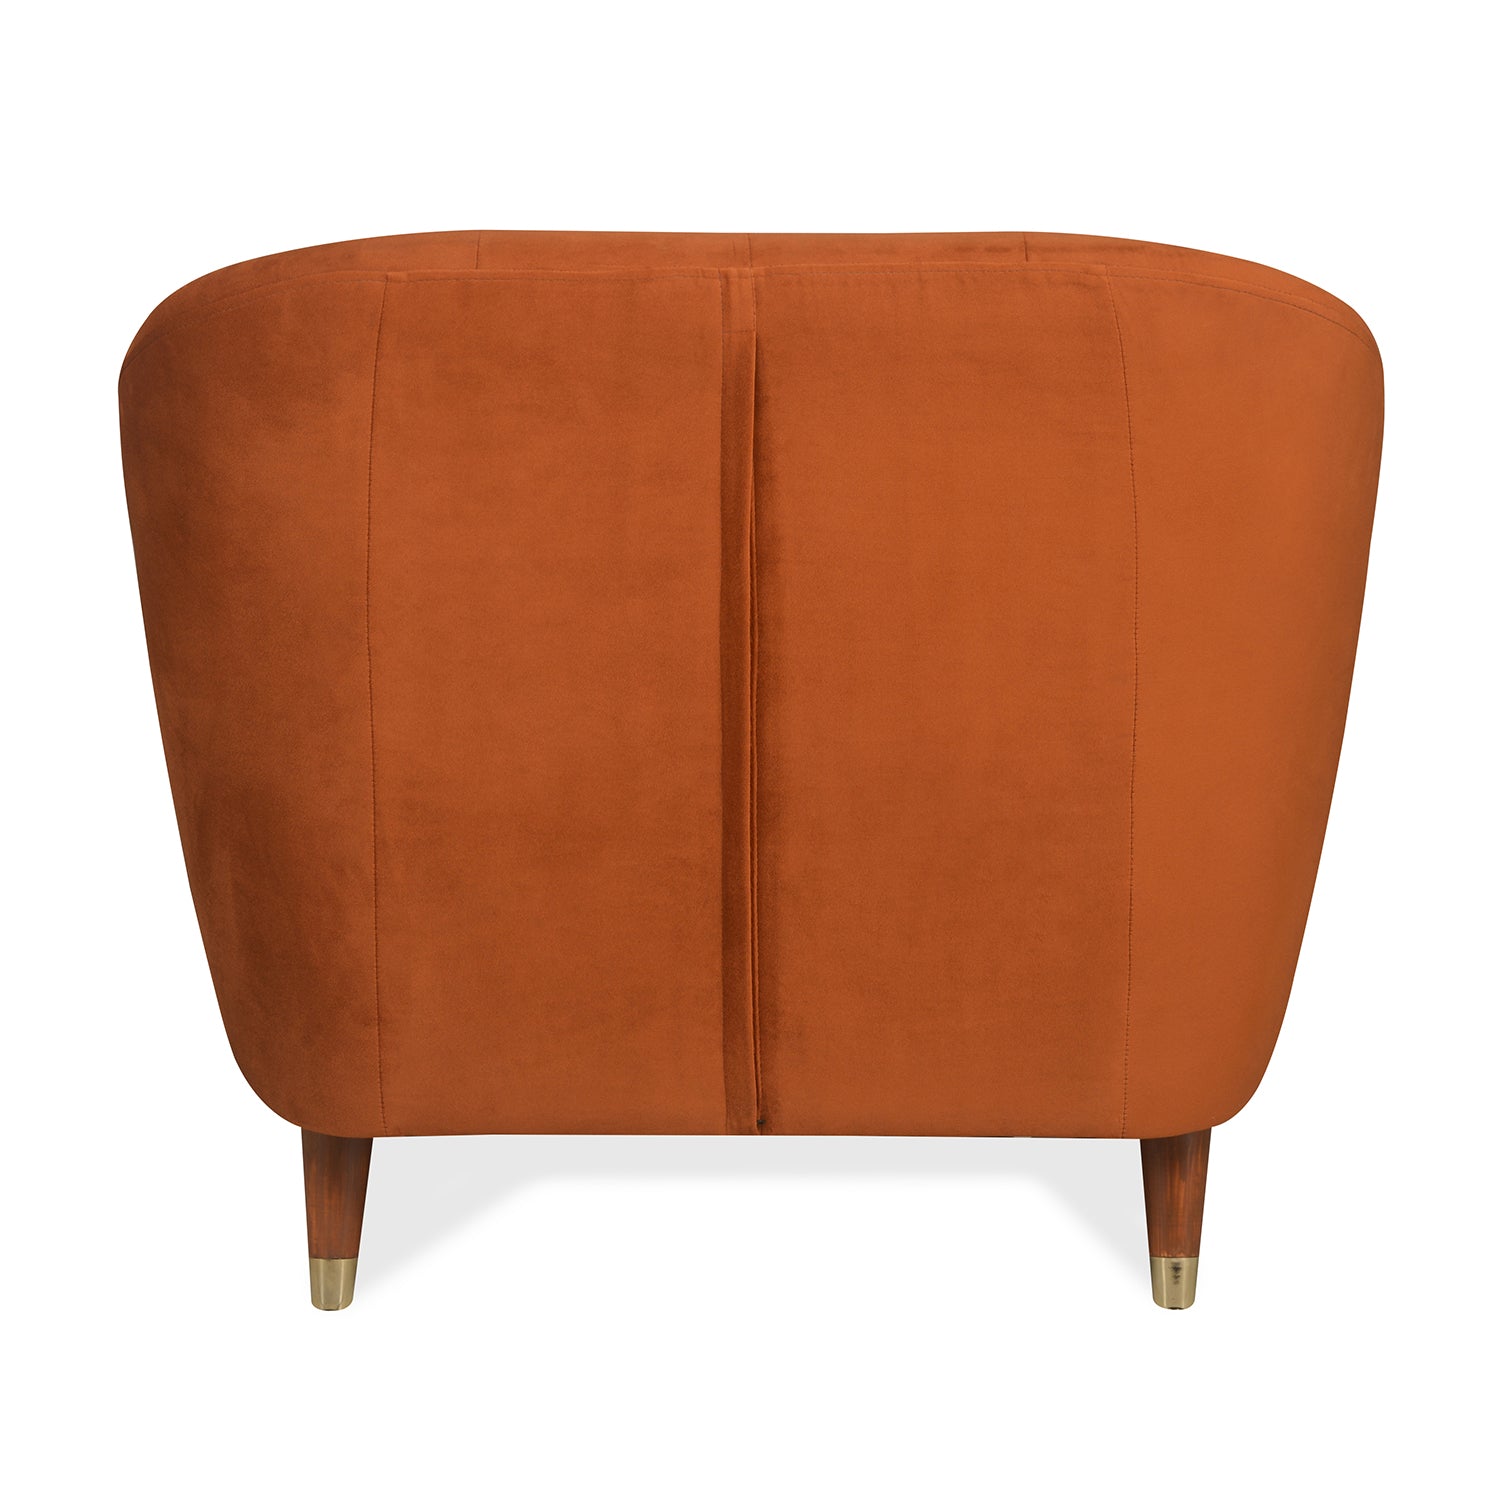 Jennifer 1 Seater Sofa (Rust)